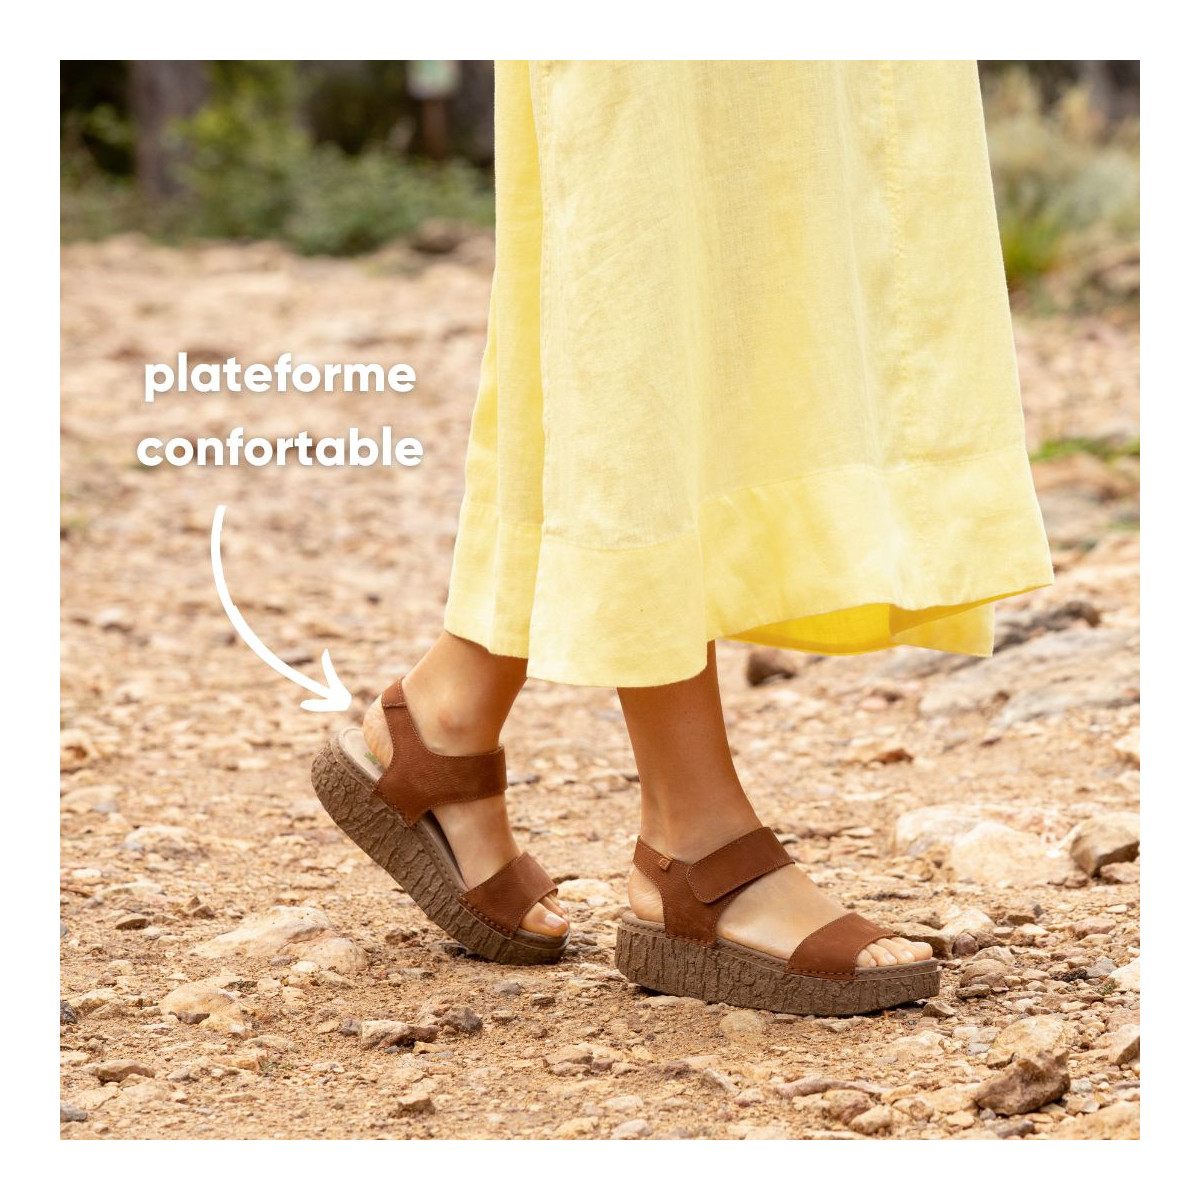 Sandales confortables à plateforme en cuir - Marron - El naturalista